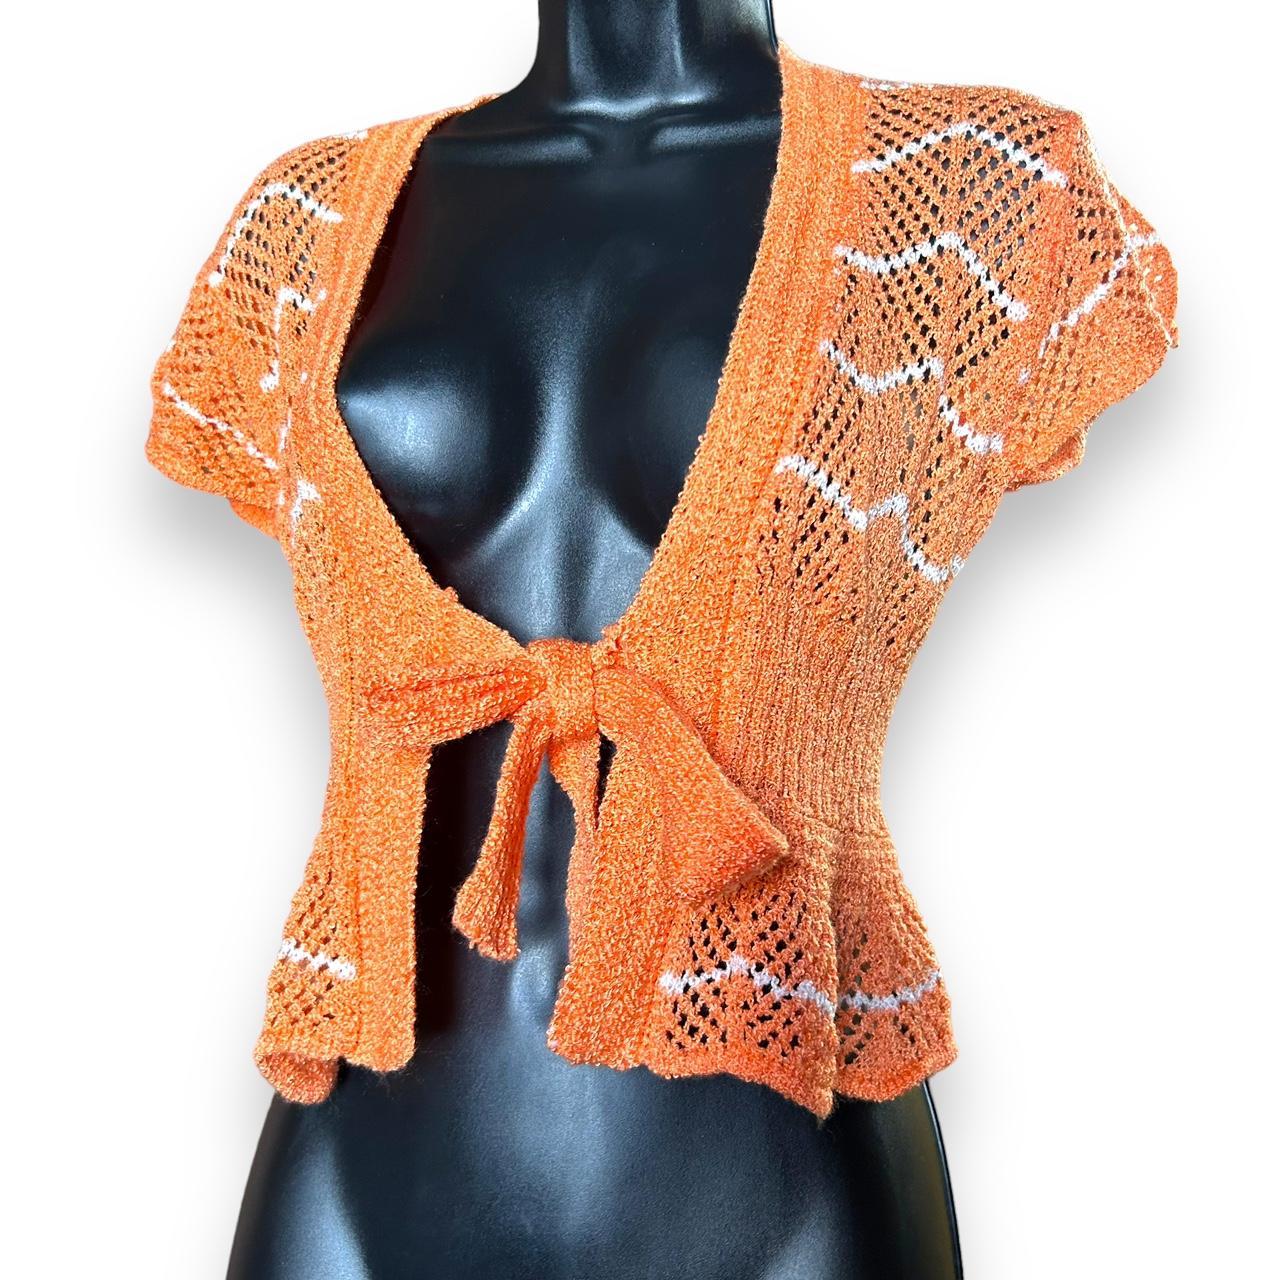 70s orange knitted mesh shrug cardi S/M